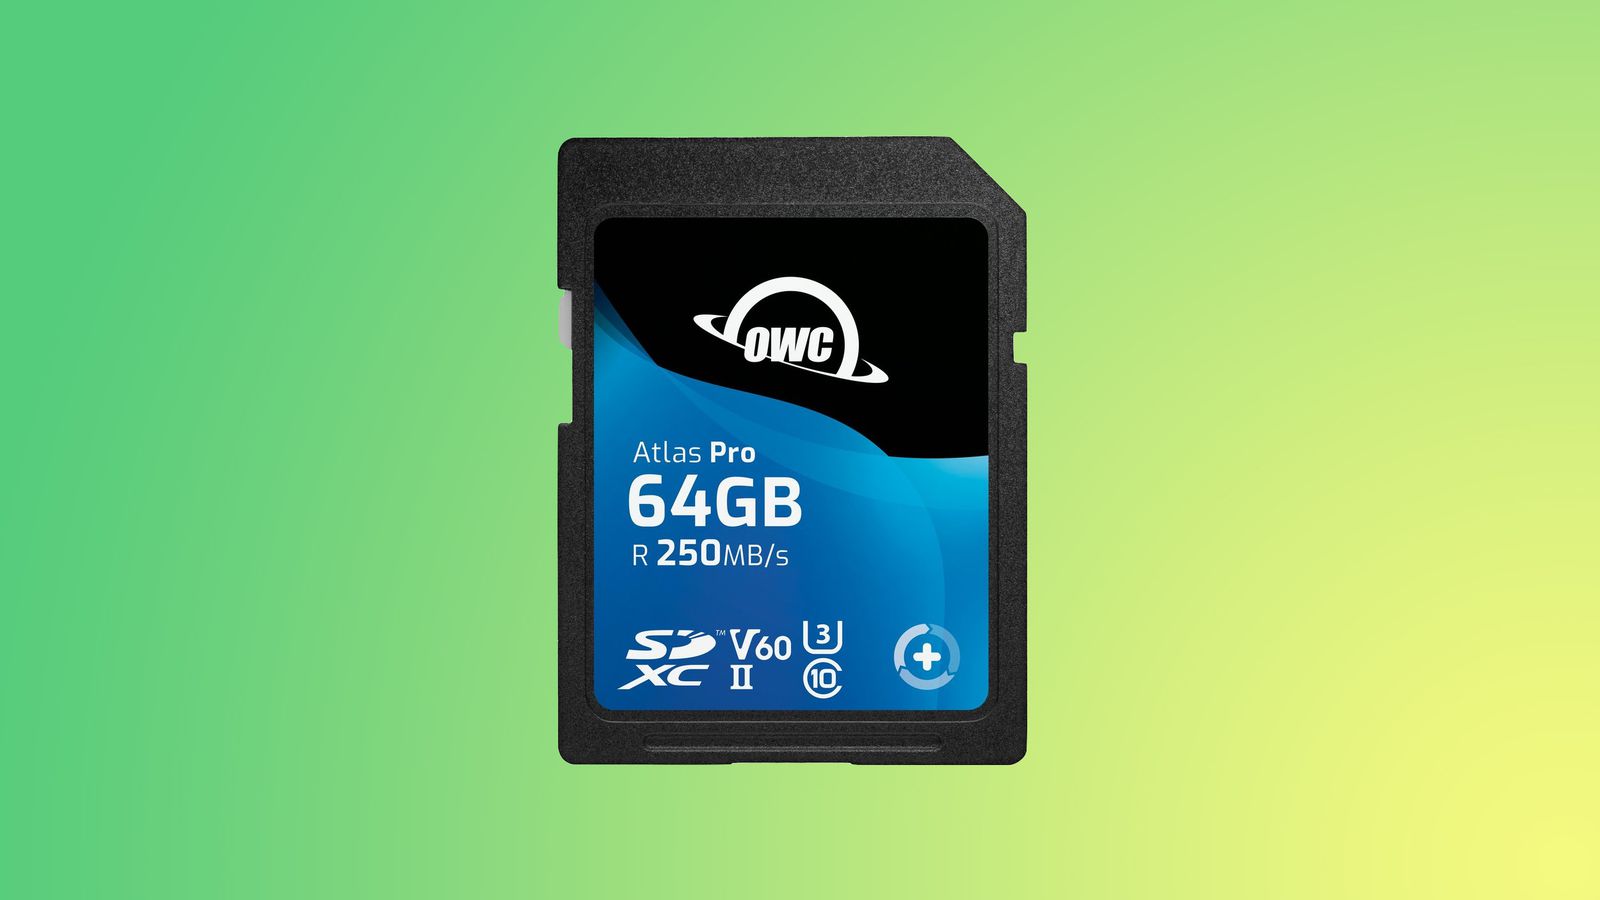 OWC Atlas Ultra SD Memory Cards